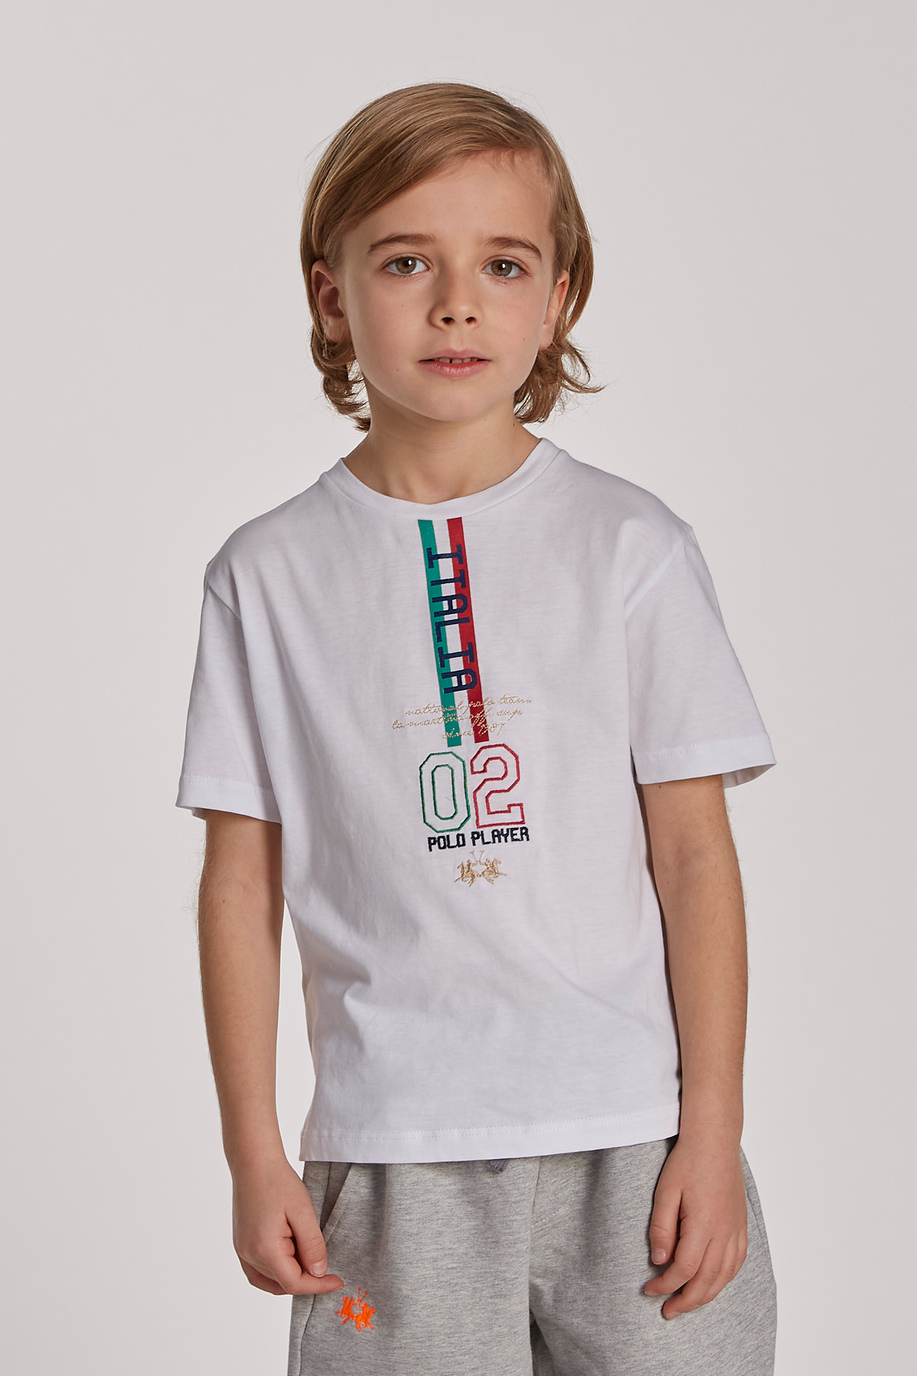 Einfarbiges T-Shirt mit kurzen Ärmeln - Kids | La Martina - Official Online Shop